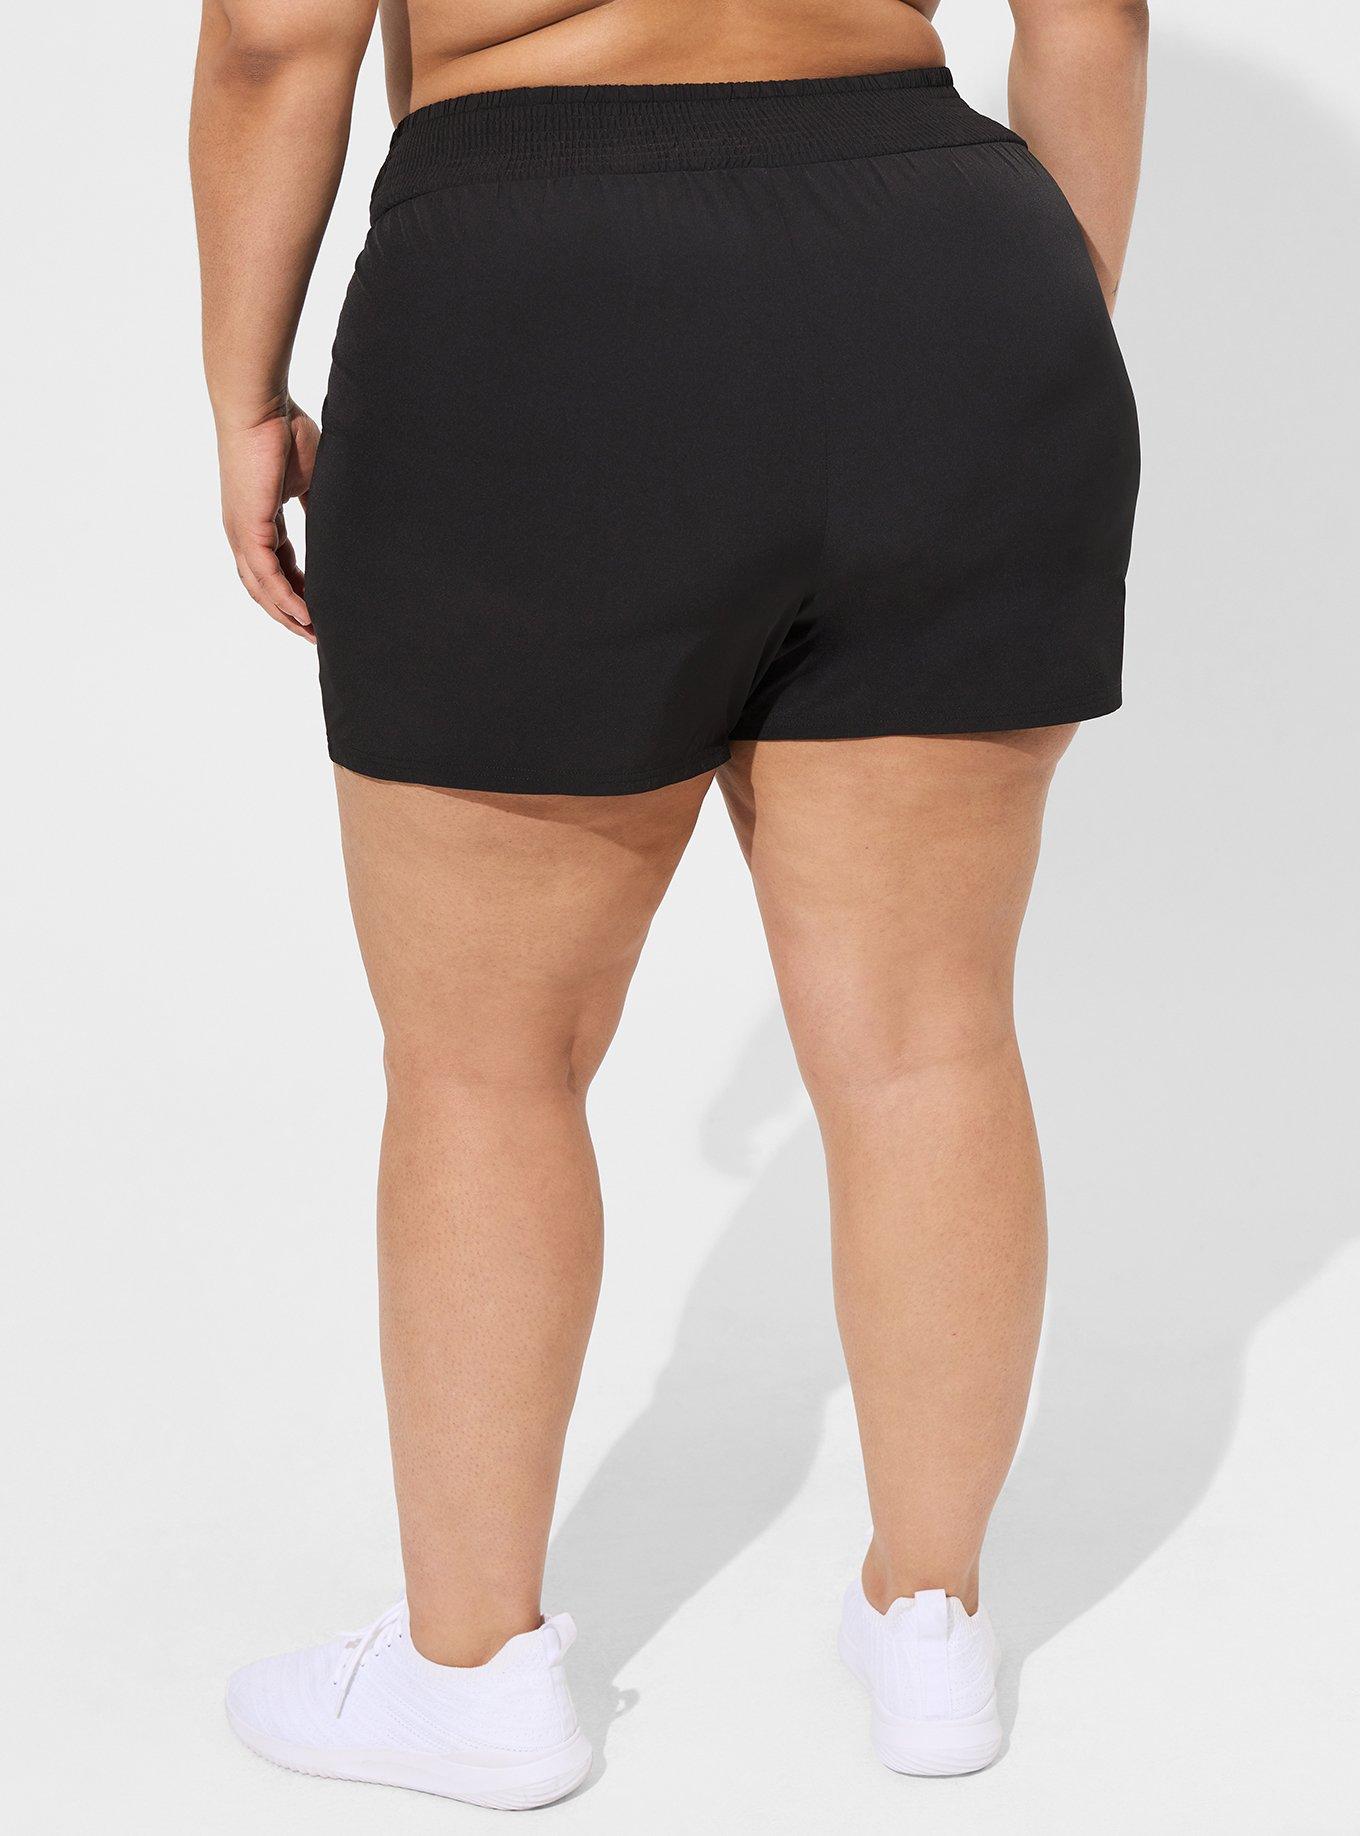 torrid, Shorts, Torrid Happy Camper Shorts Performance Wear Black Size X  1416